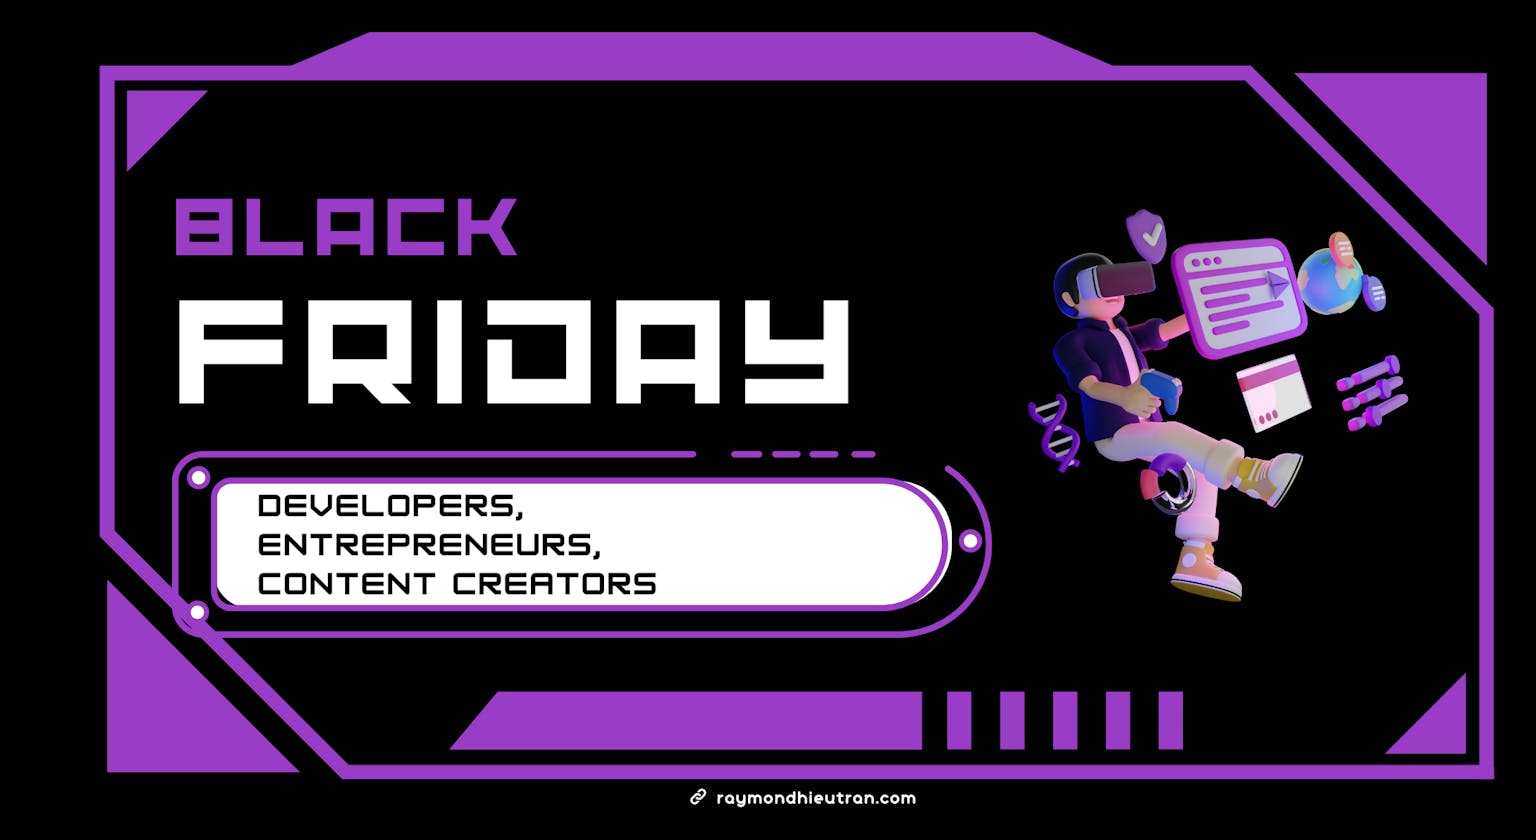 Essential Black Friday Deals For Developers and Tech Entrepreneurs